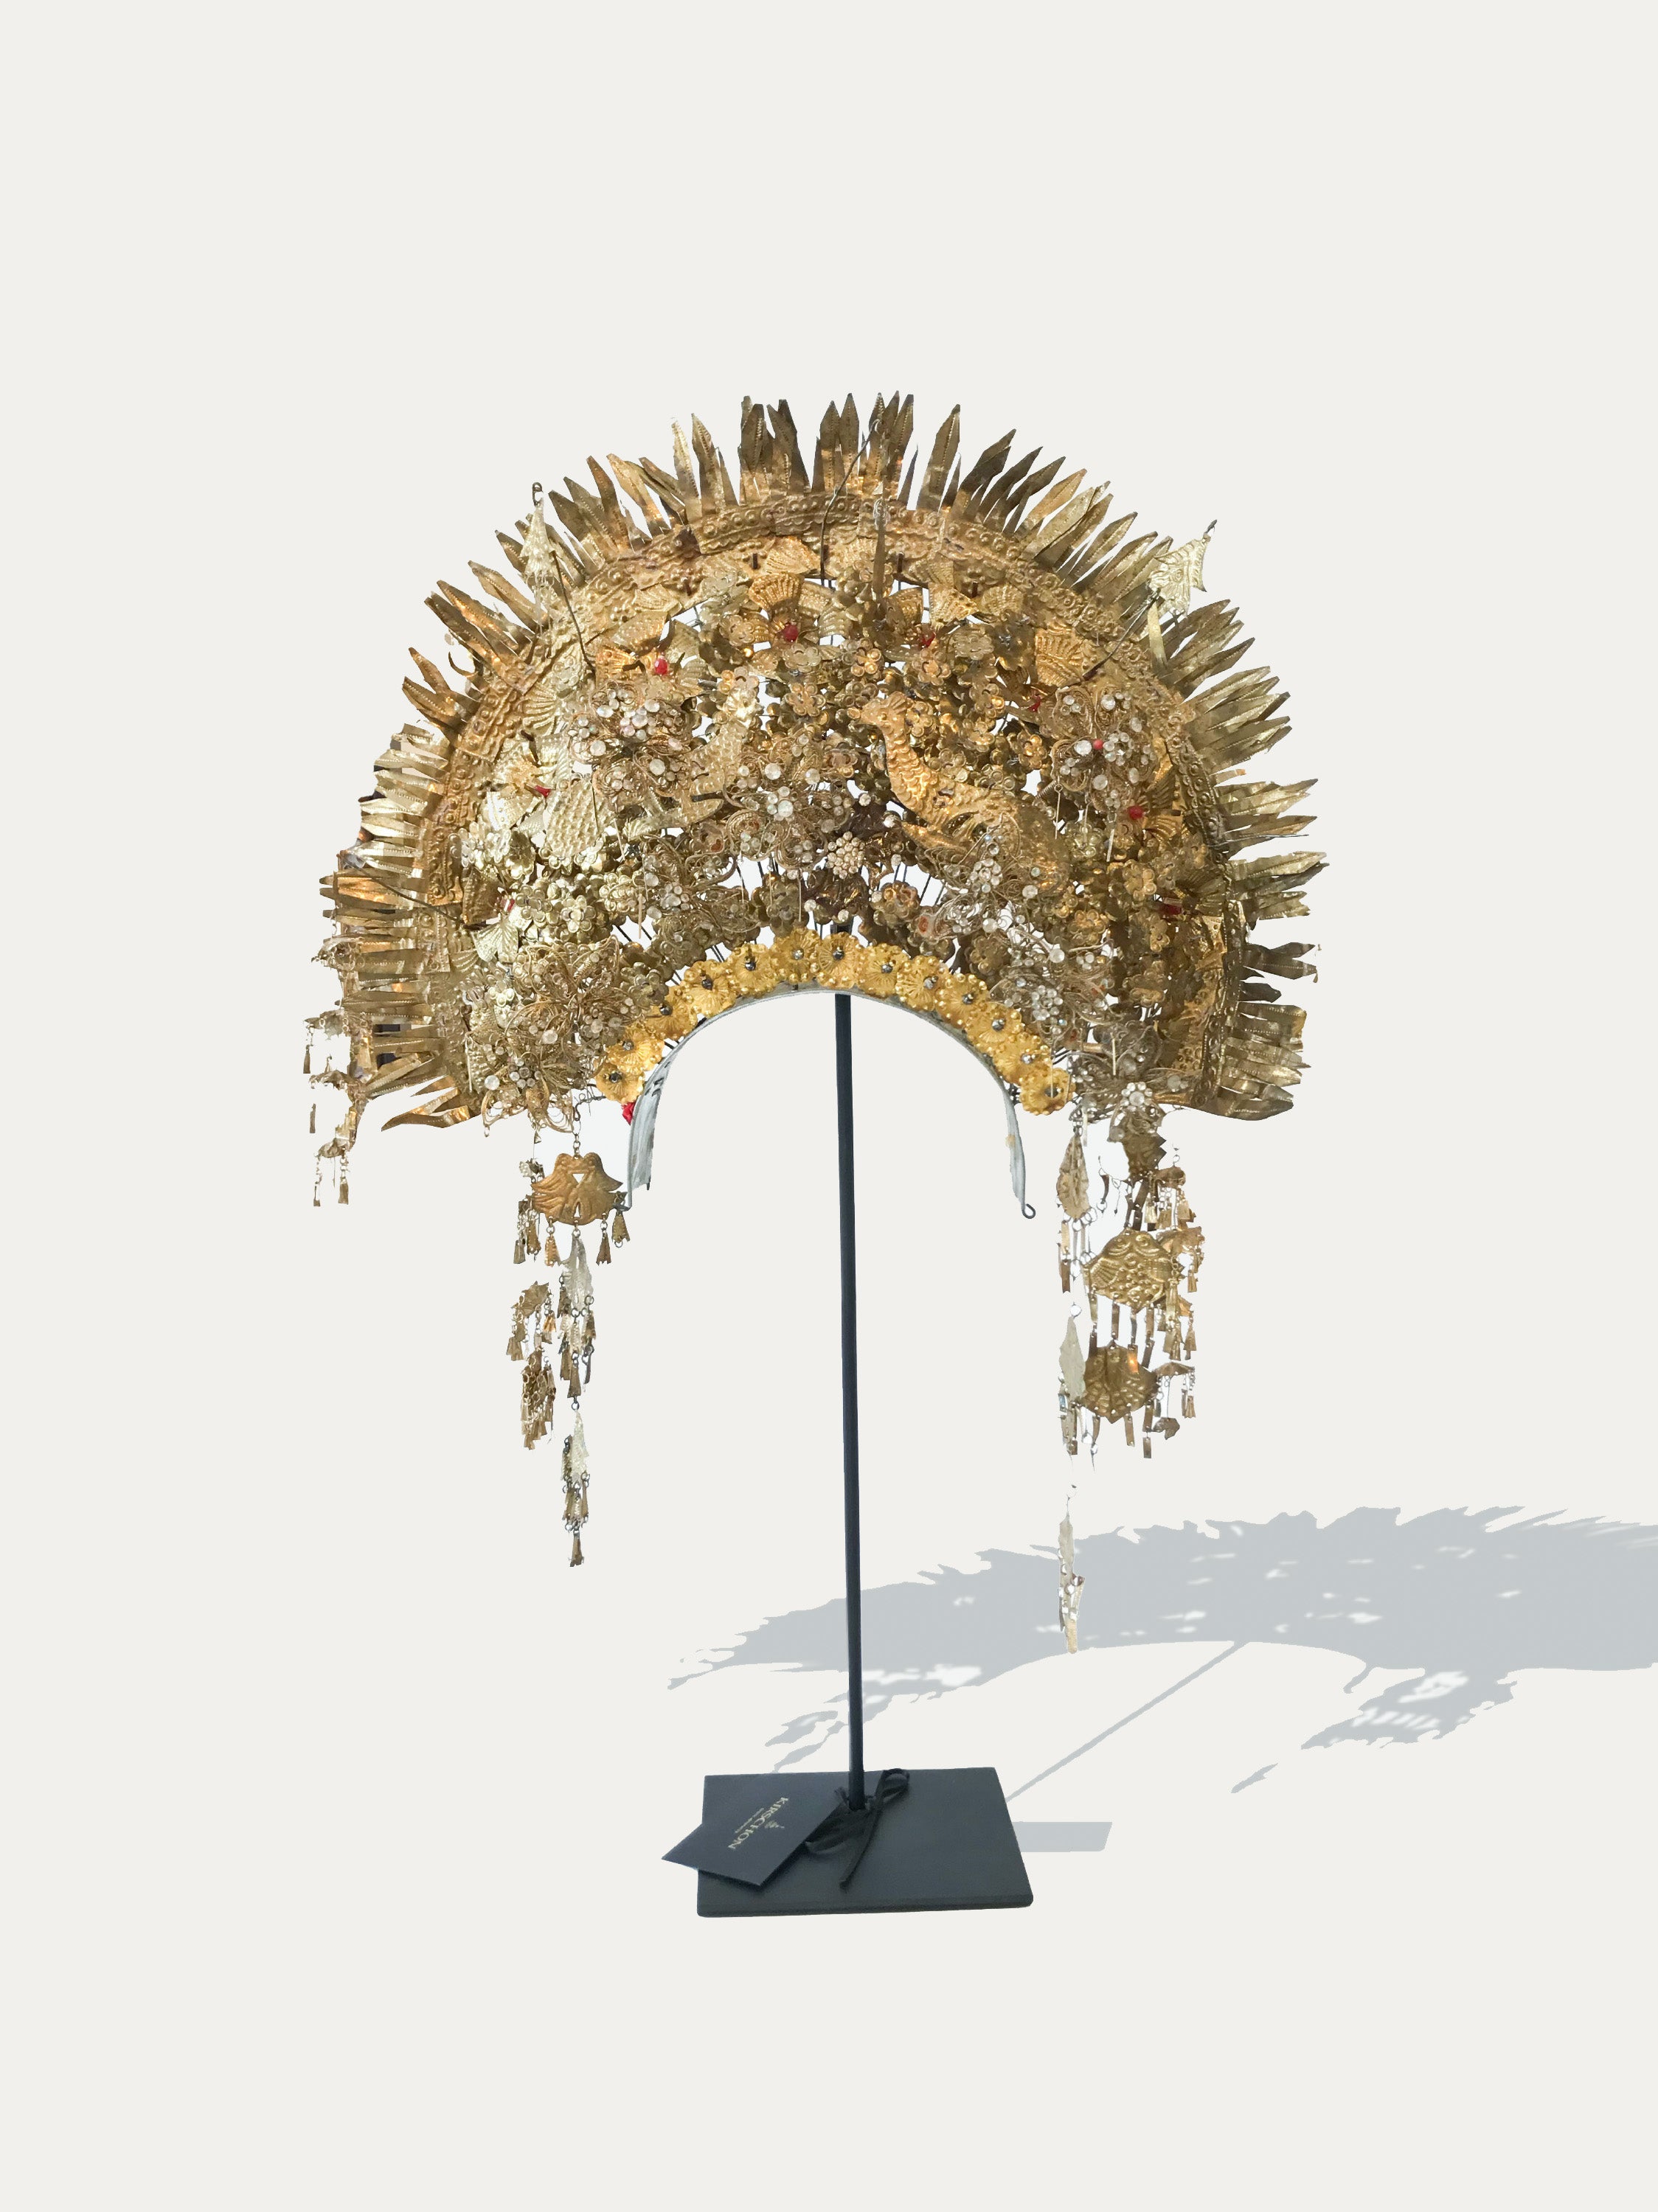 Suntiang crown from Sumatra - Asian art from Kirschon